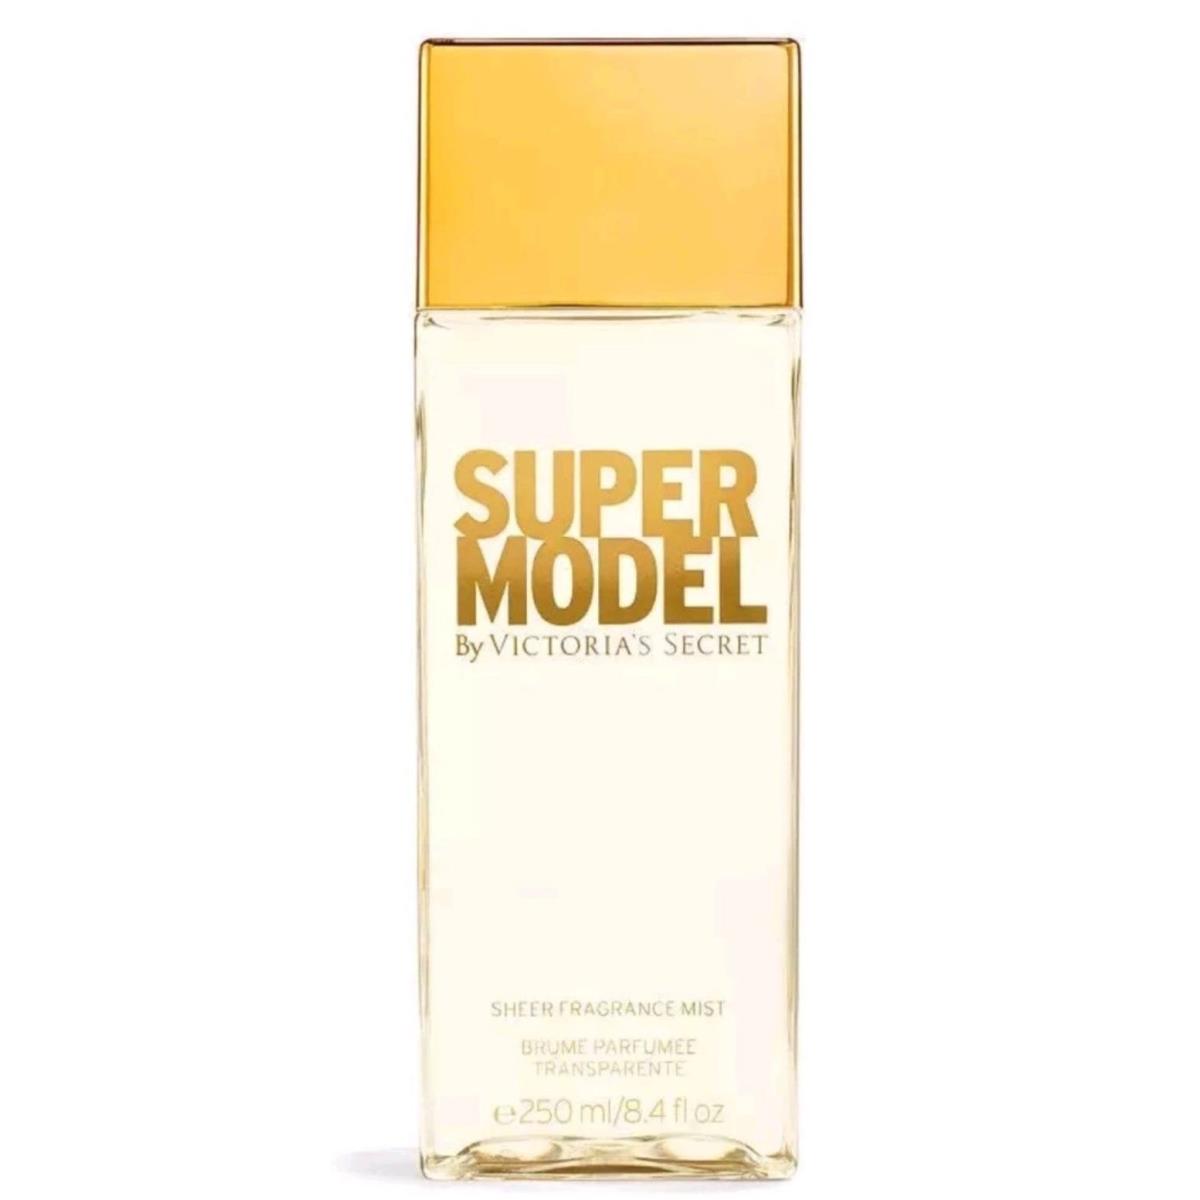 Victorias Secret Supermodel Fragrance Mist Brume Parfumee 8.4